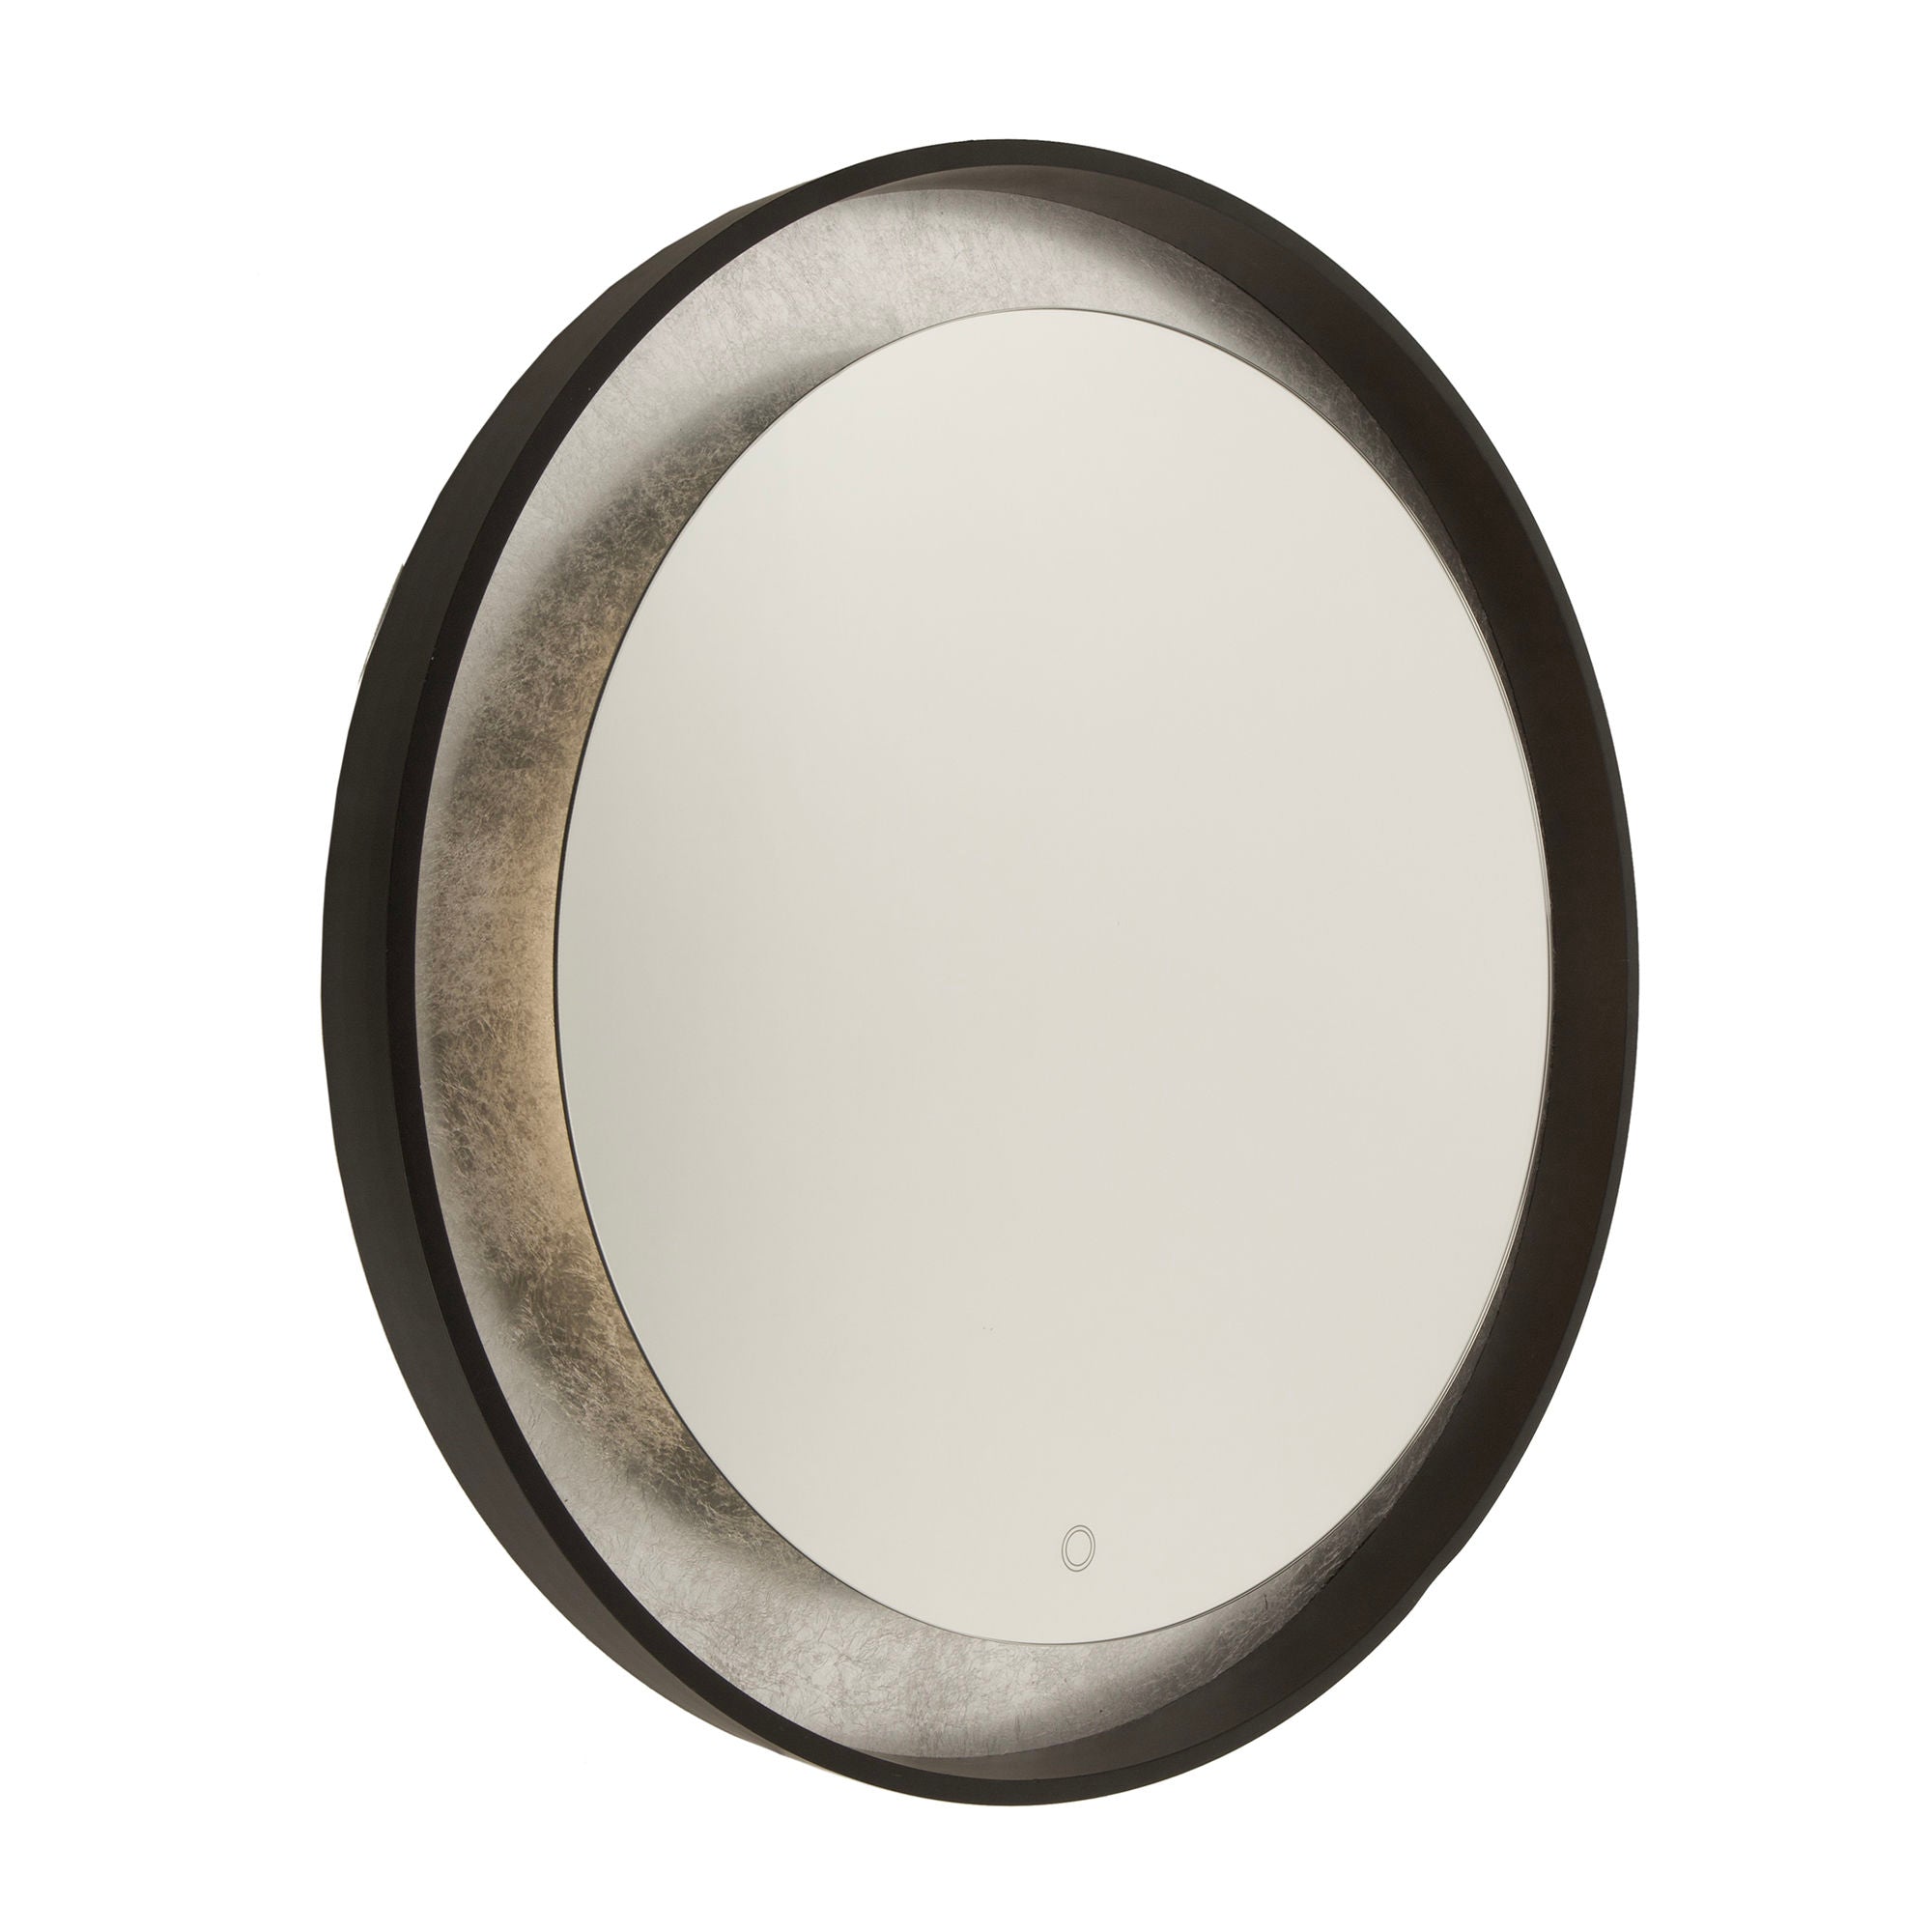 Reflections Miroir Bronze, Nickel DELINTÉGRÉ - AM305 | ARTCRAFT